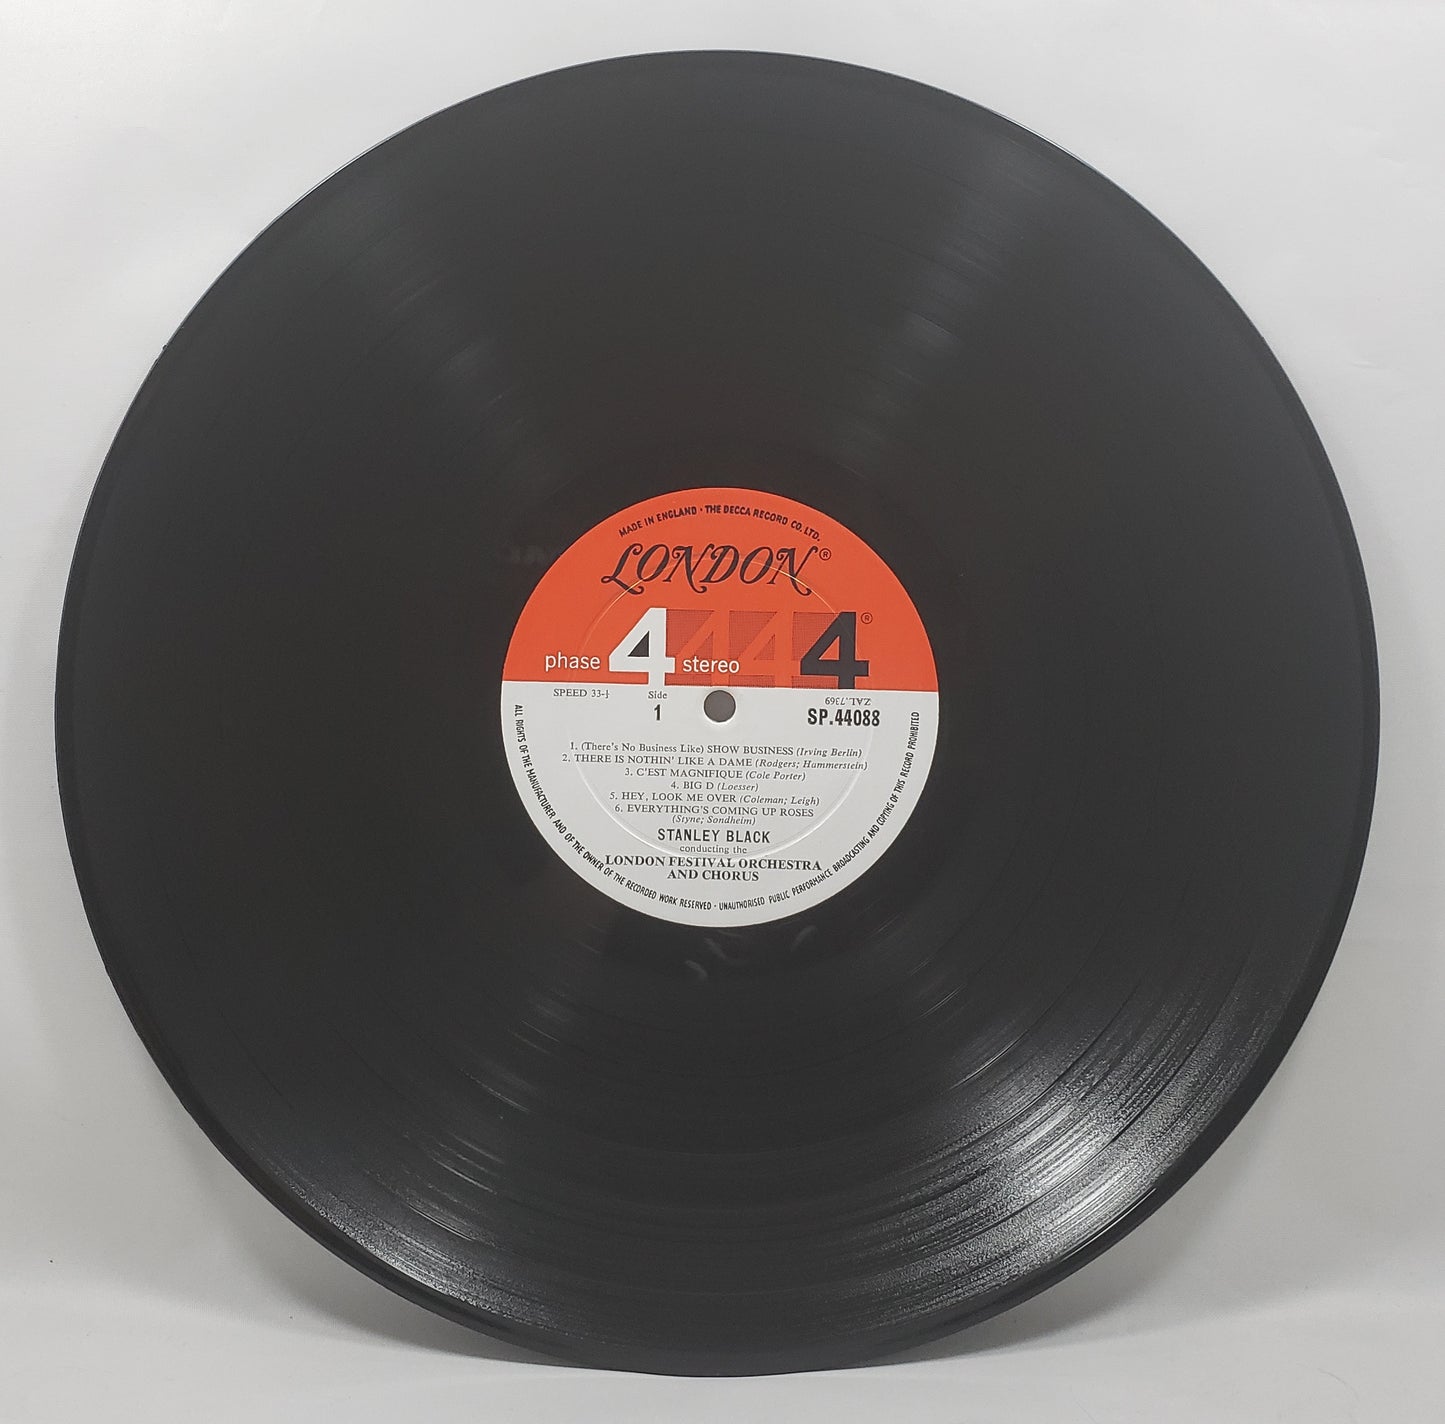 Stanley Black - Broadway Blockbusters [1967 Phase 4] [Used Vinyl Record LP]